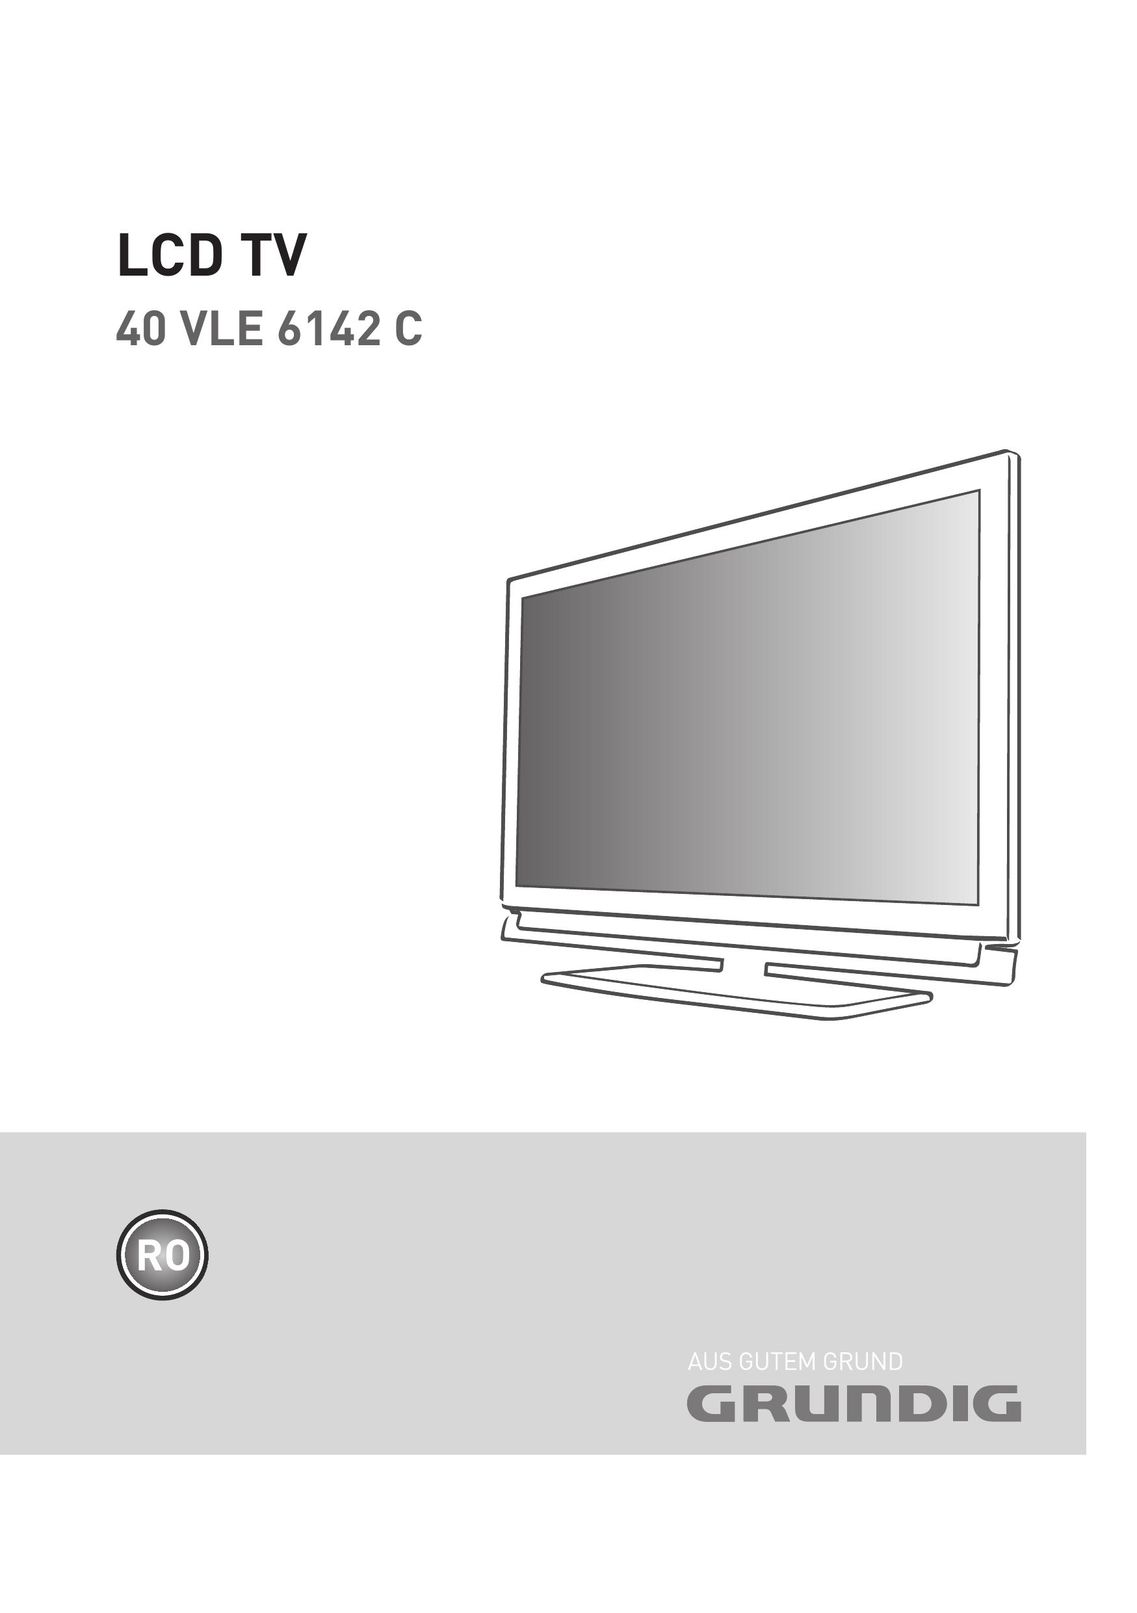 Grundig 40 VLE 6142 C Flat Panel Television User Manual